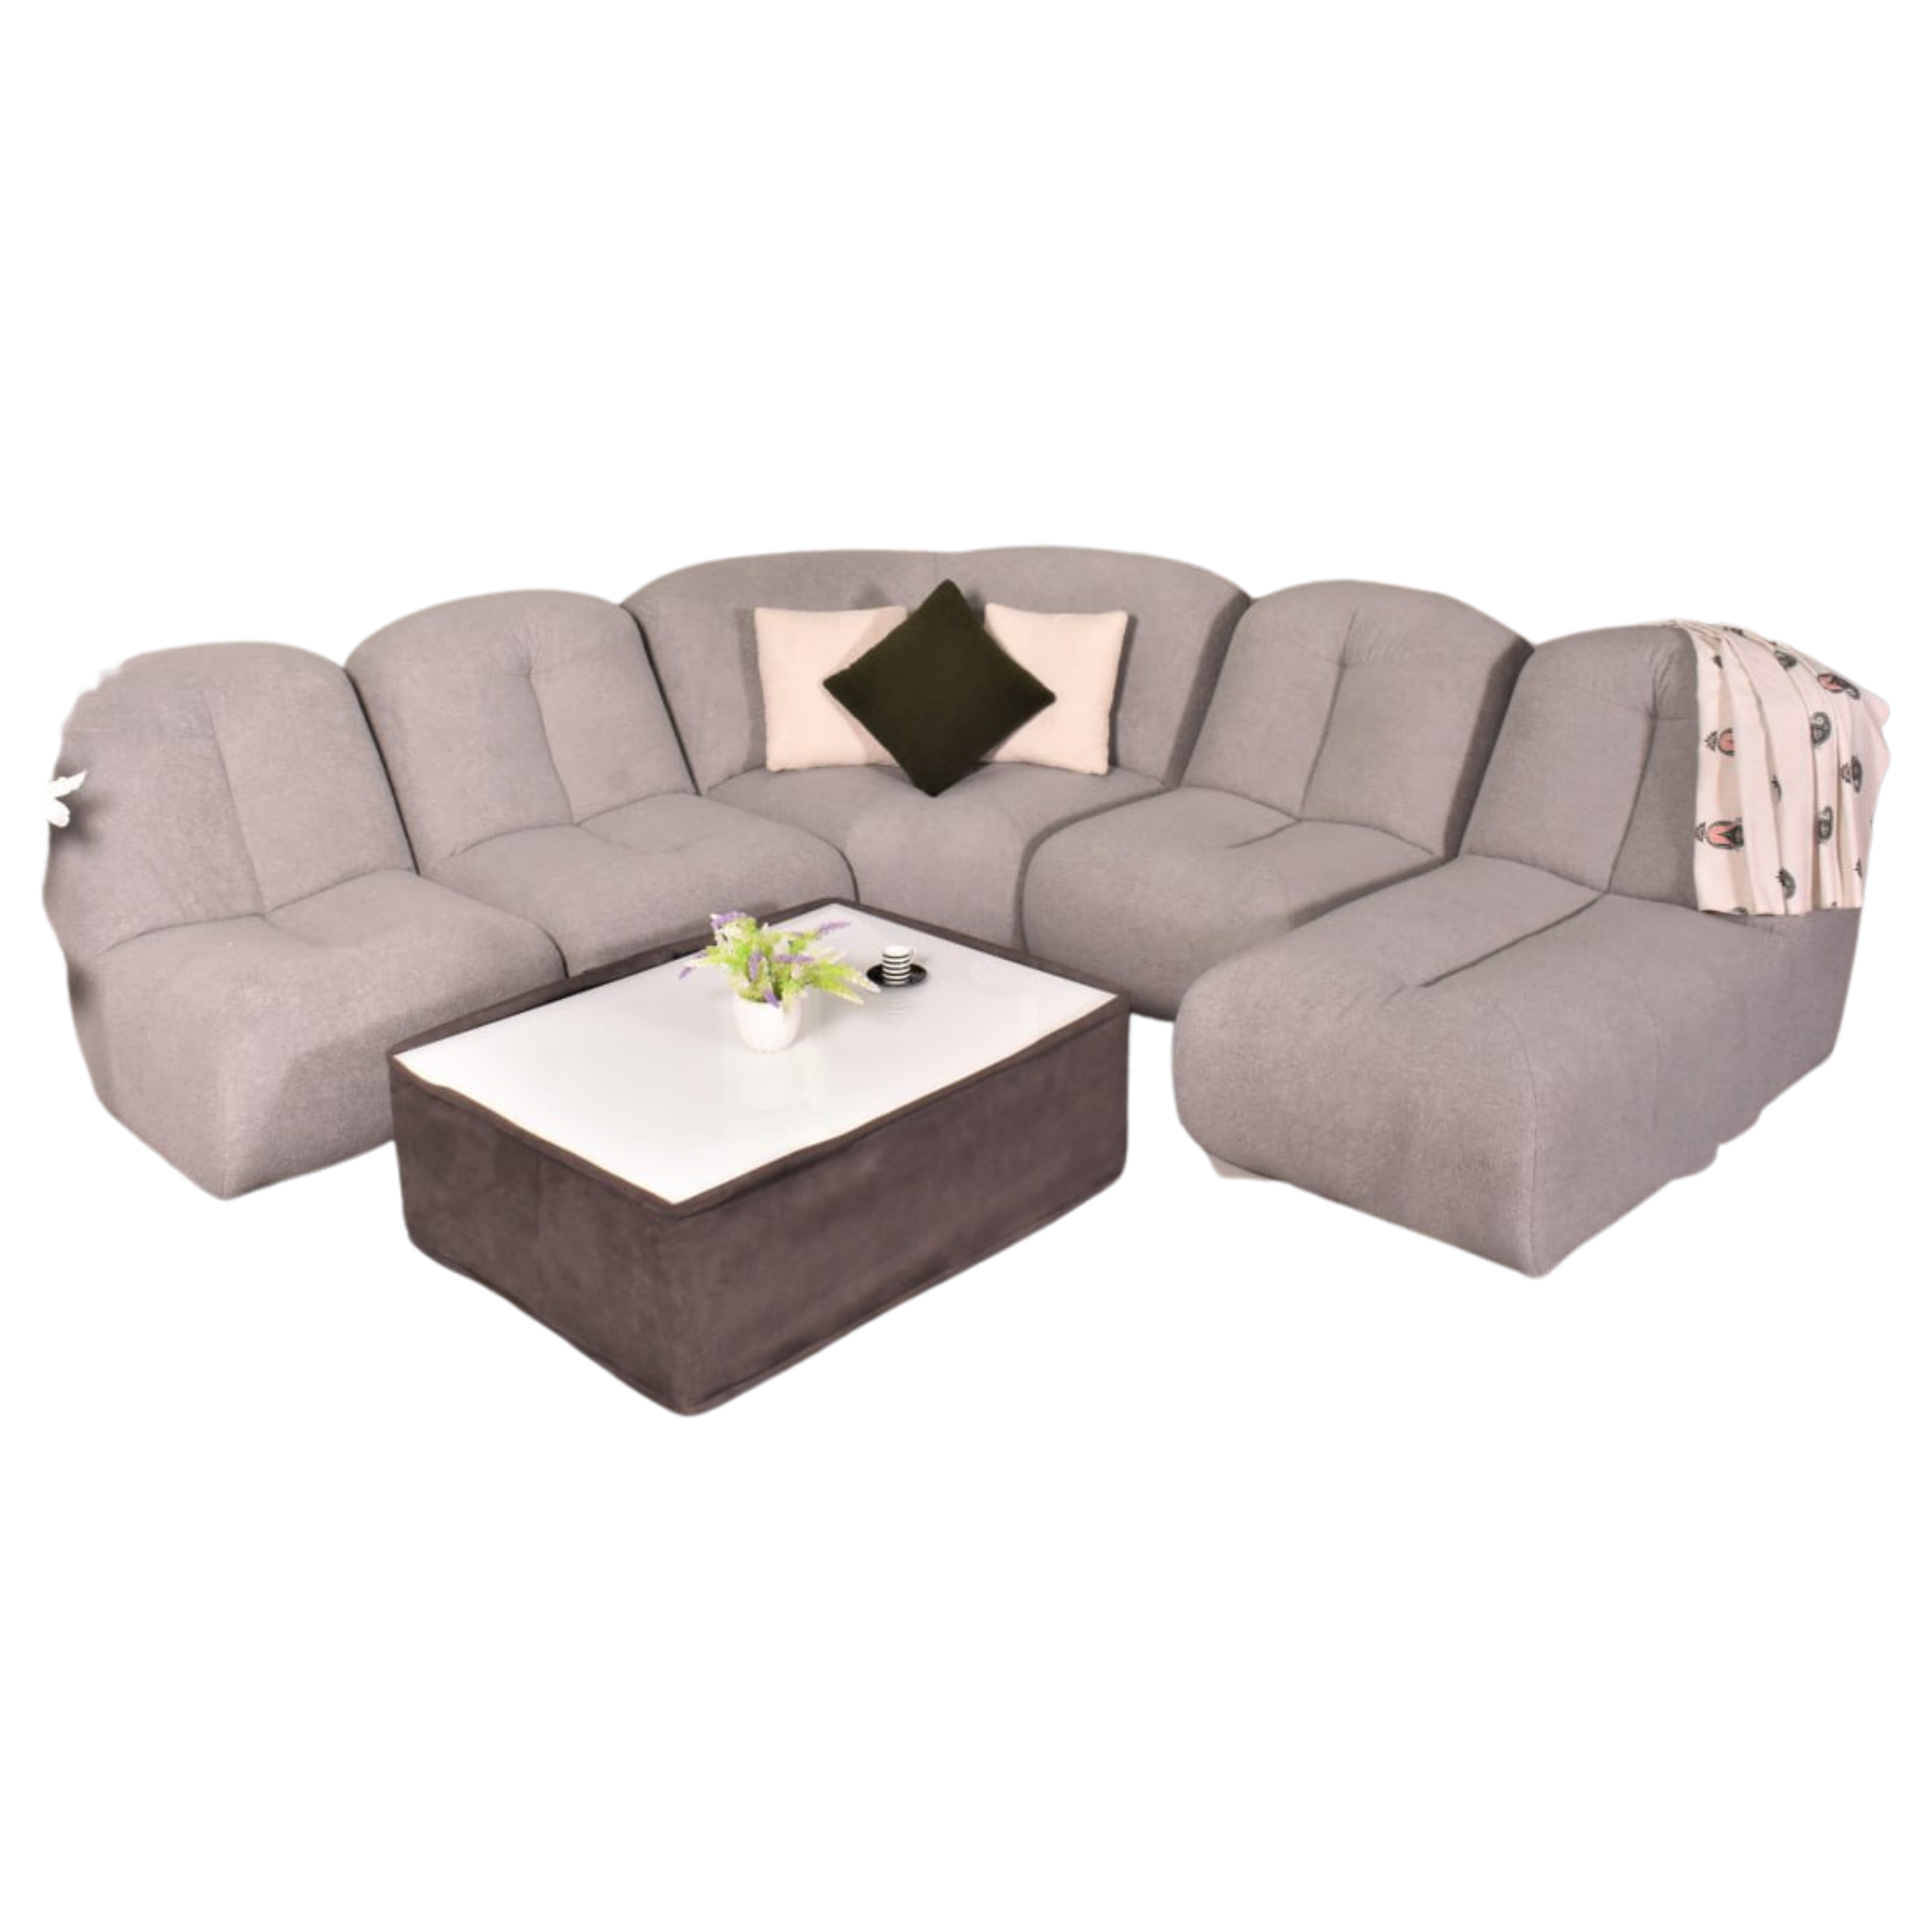 Cloudio Sectional Sofa